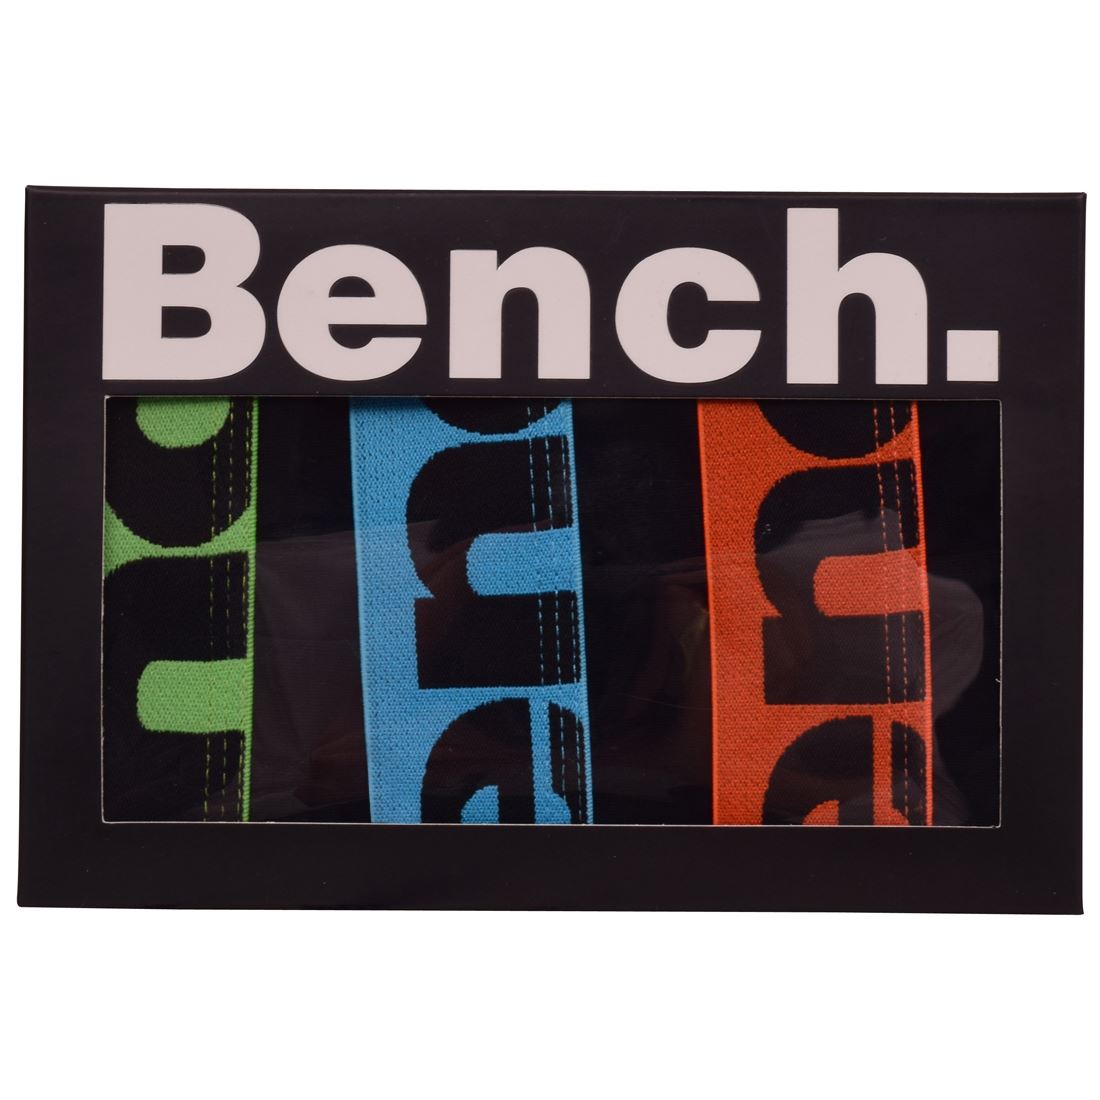 Bench 3 Pack Mens Designer Black Boxers Underwear Under pants Trunks Gift Box